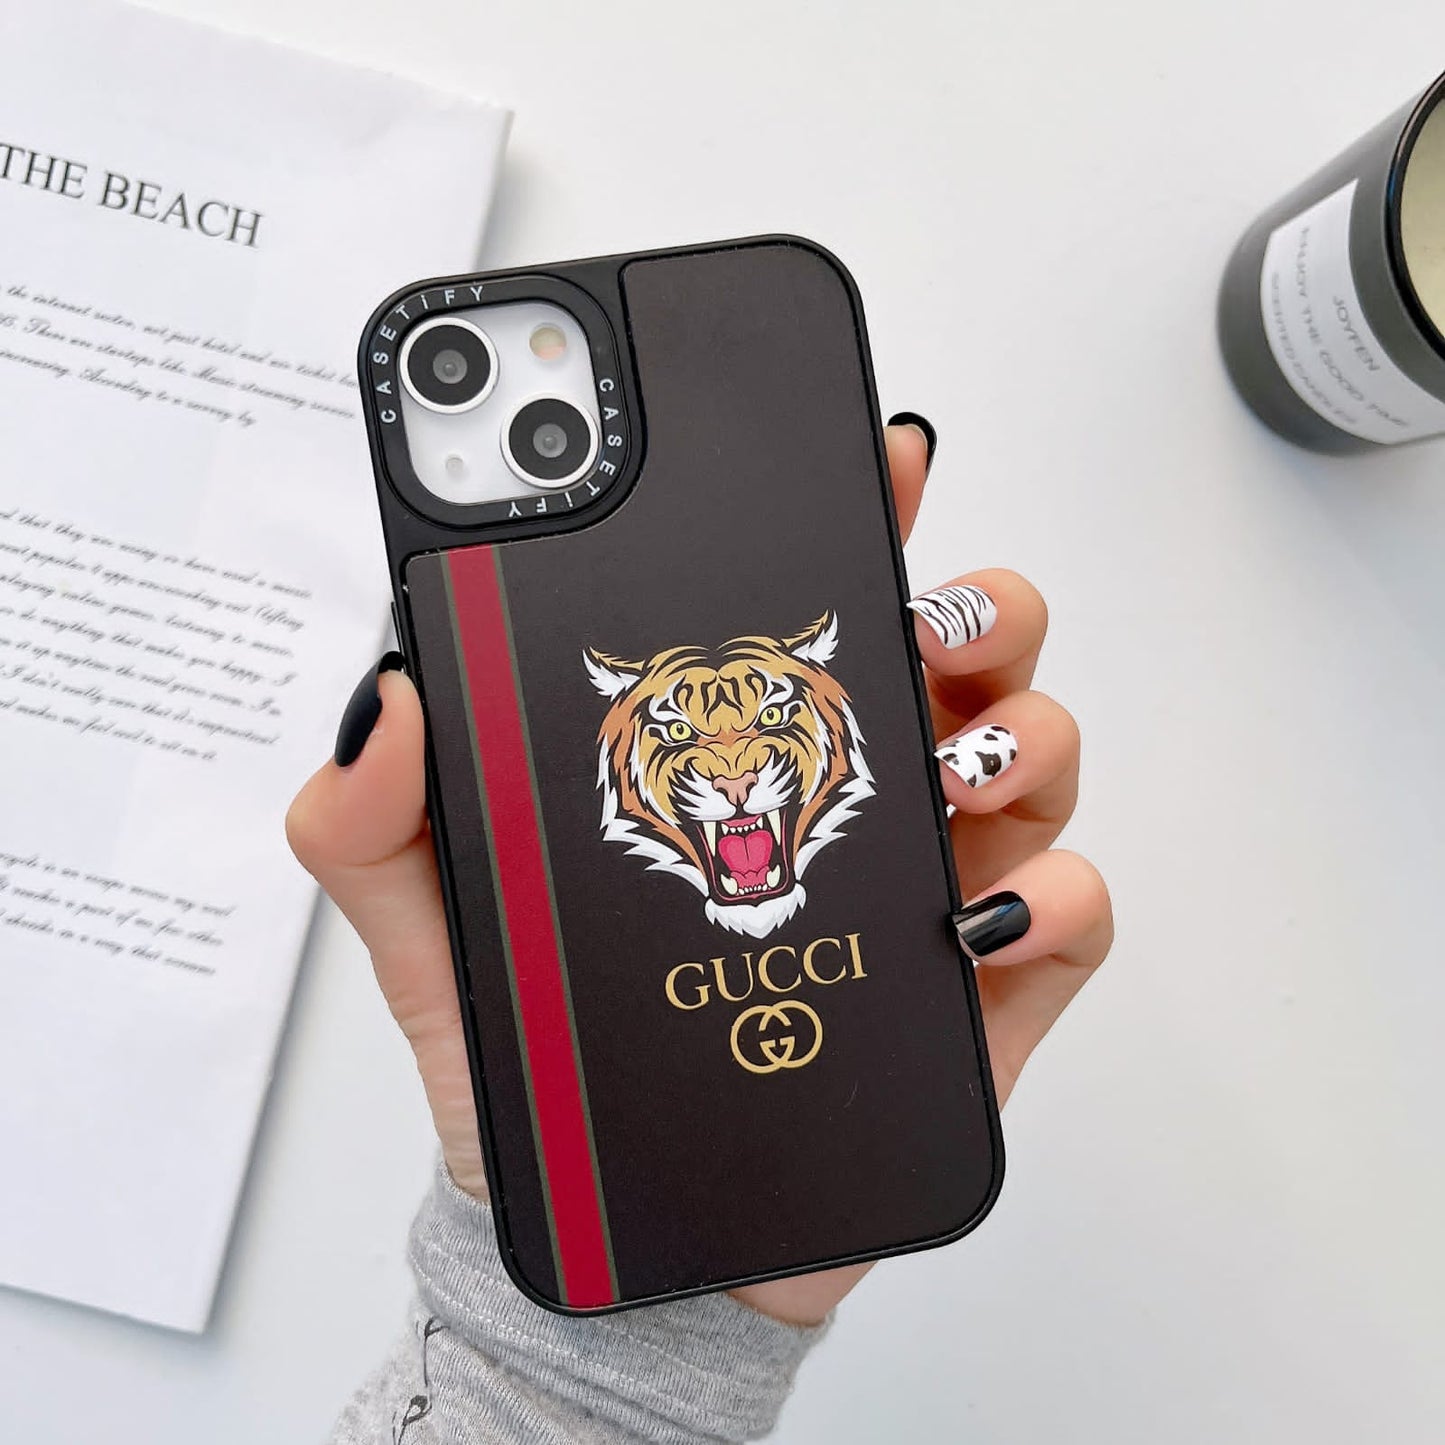 Luxury Branded Unisex Silicone iPhone Case Design #004